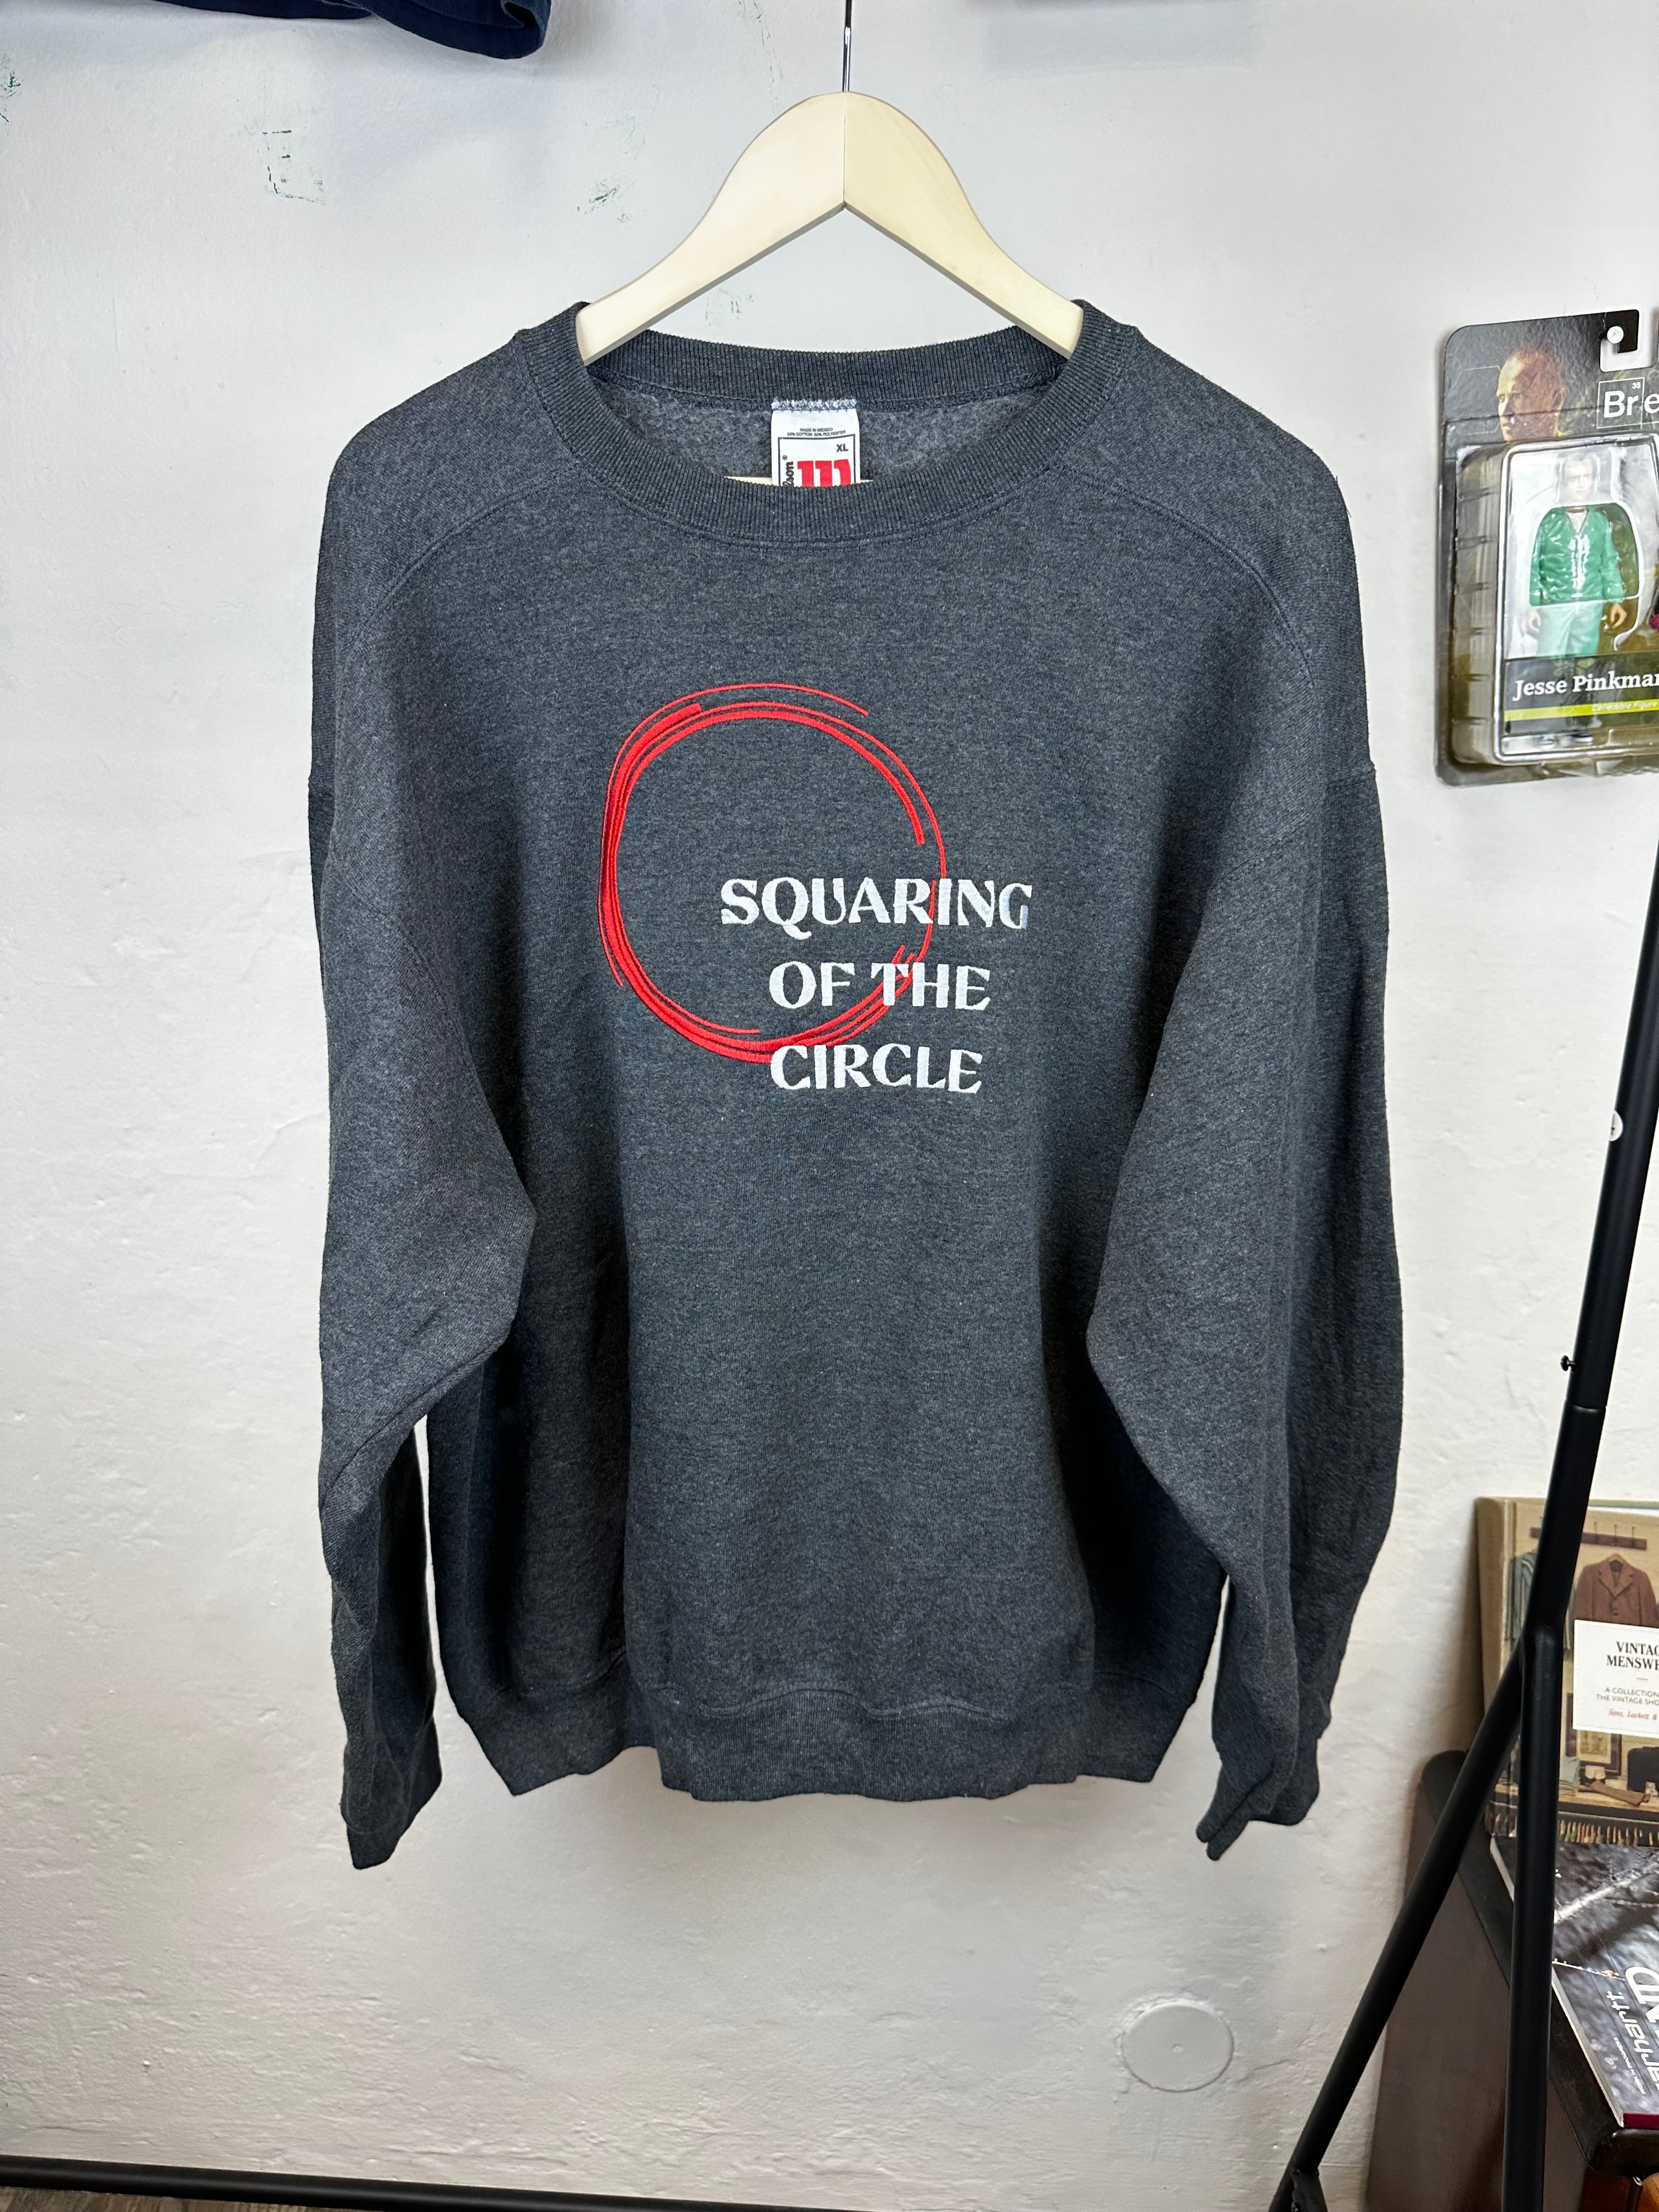 No Introductions - "Squaring of the Circle" crewneck - size XL